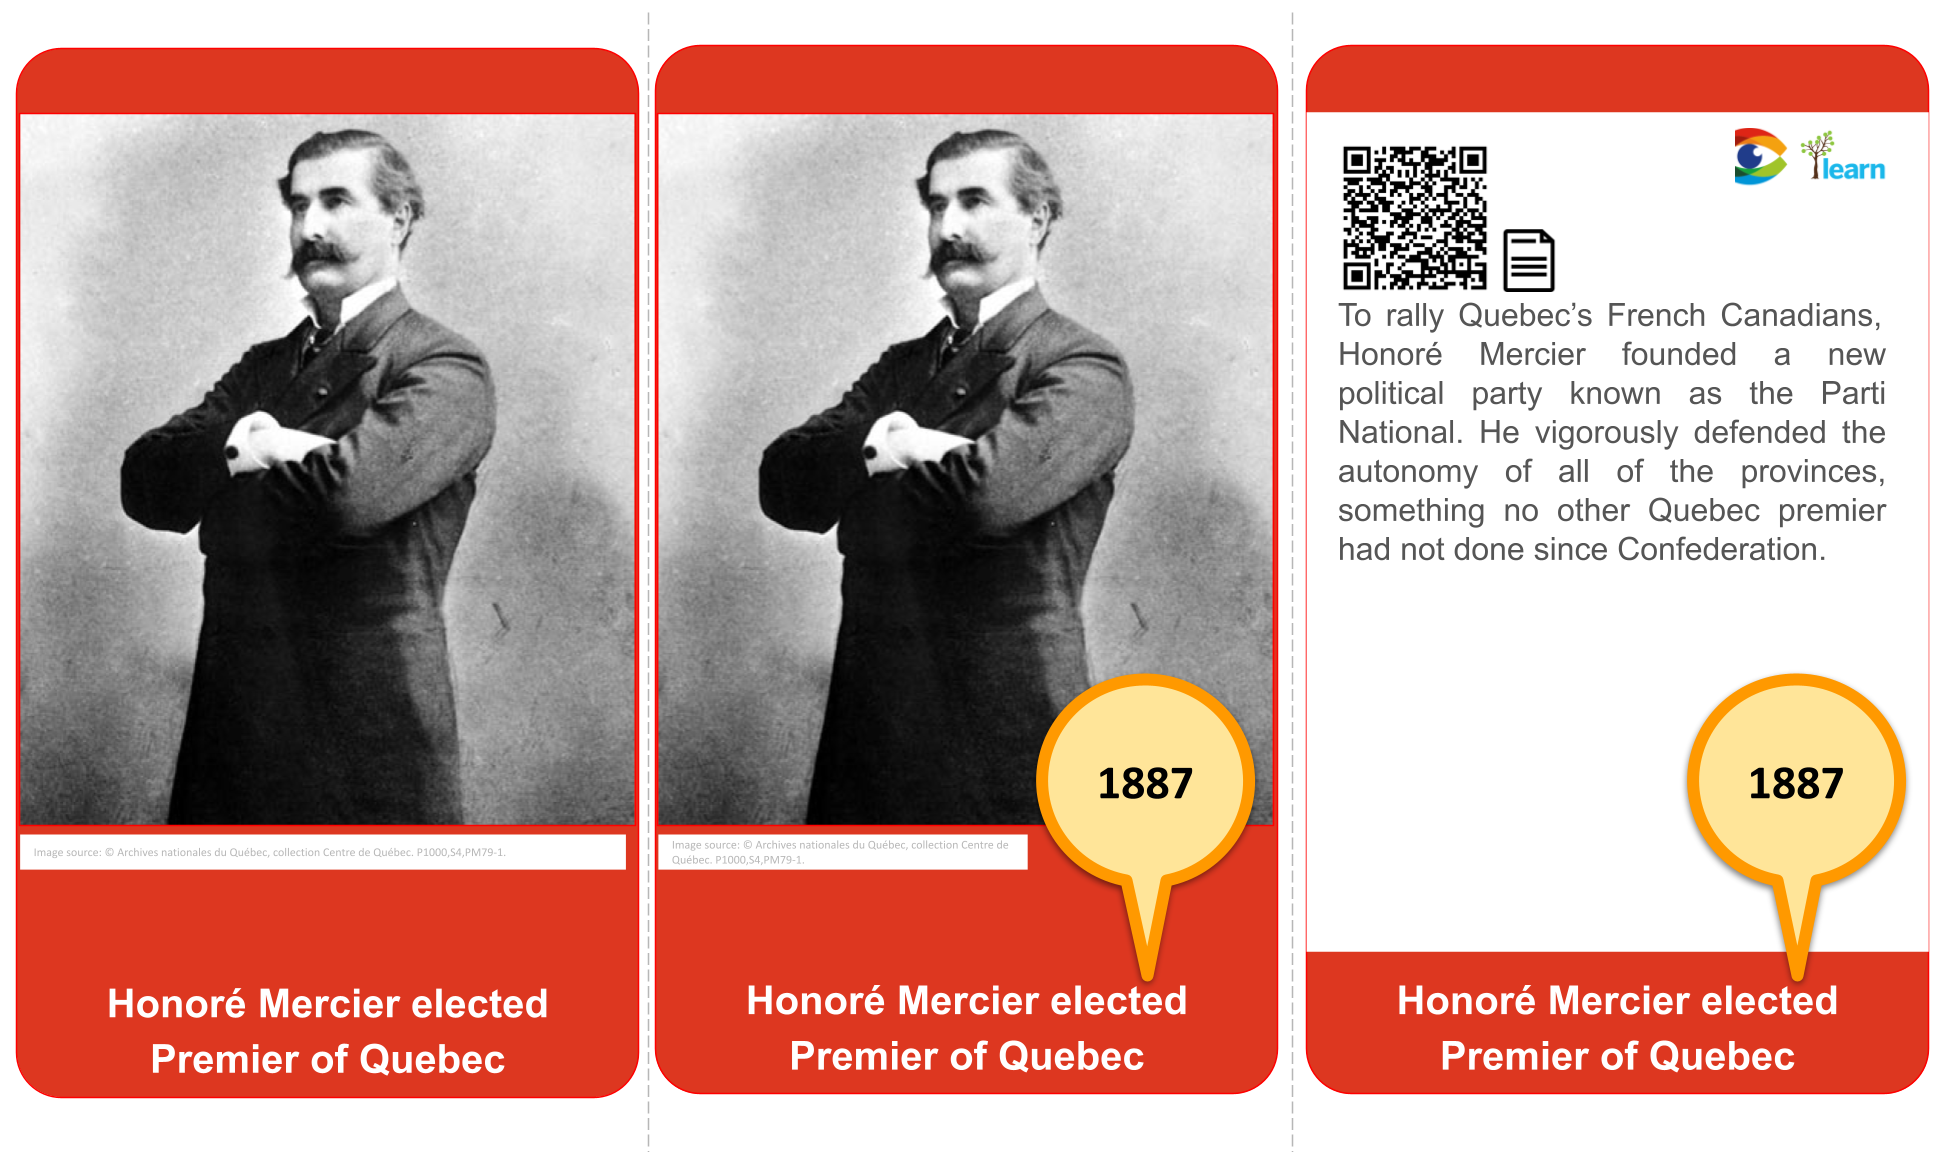 1887 Honoré Mercier becomes Premier of Quebec